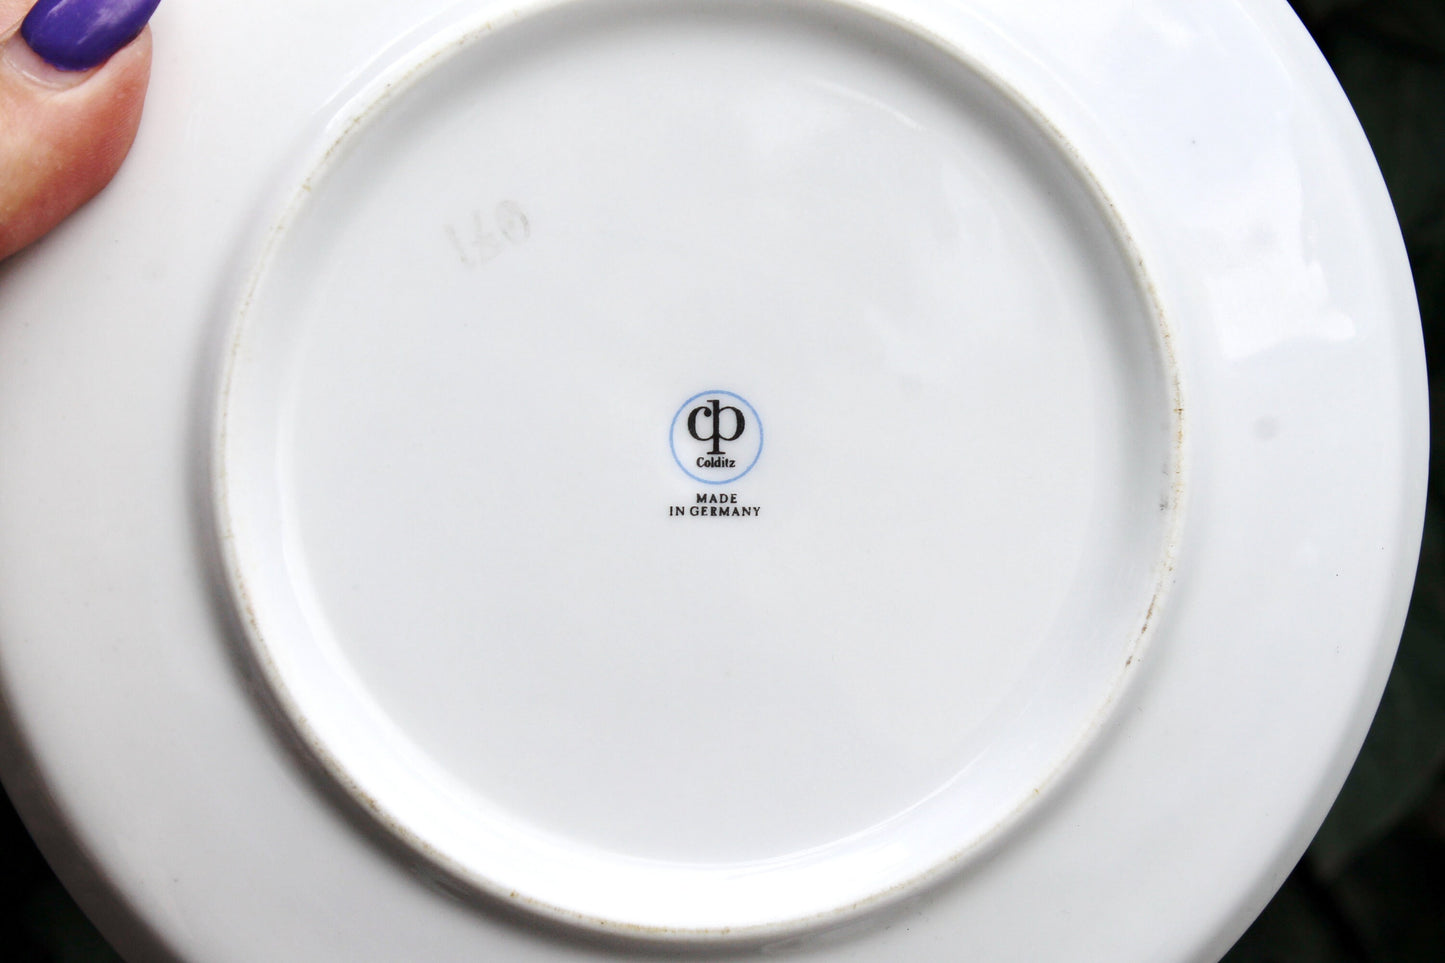 Vintage porcelain plate from GDR. Colditz porcelain factory. Made in Germany - vintage plate 1960-1970s